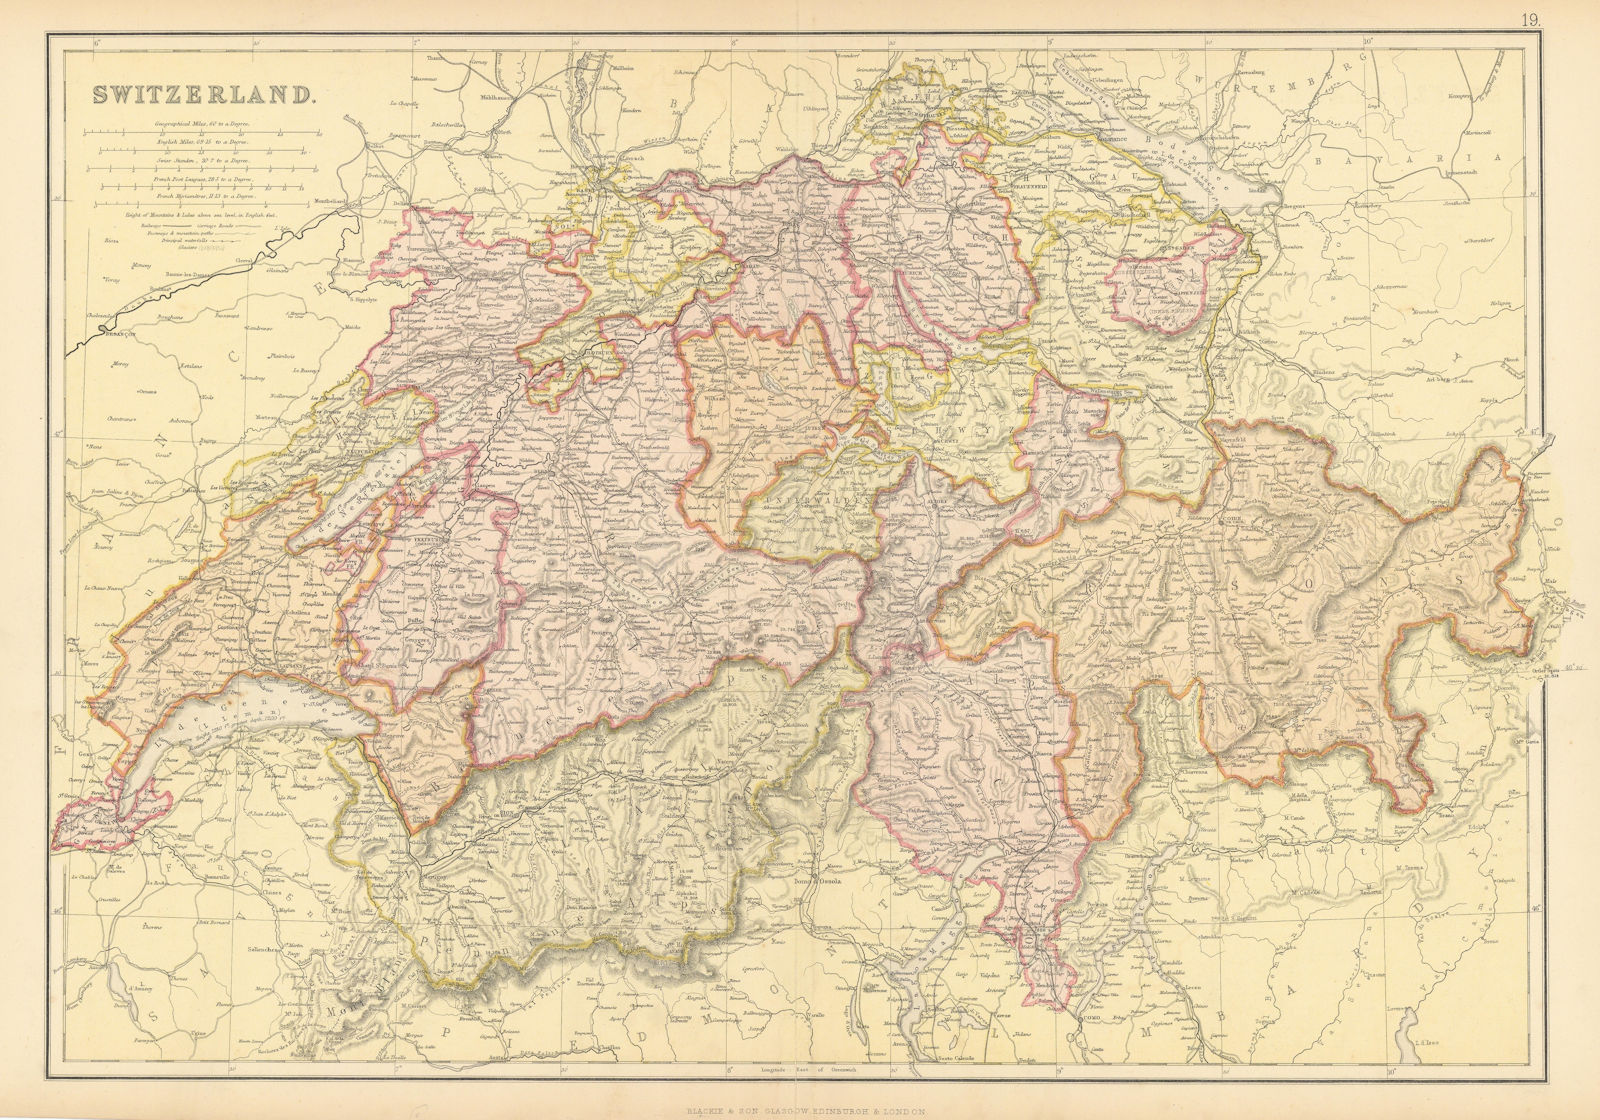 SWITZERLAND. railways mountain paths waterfalls & glaciers. BLACKIE 1886 map